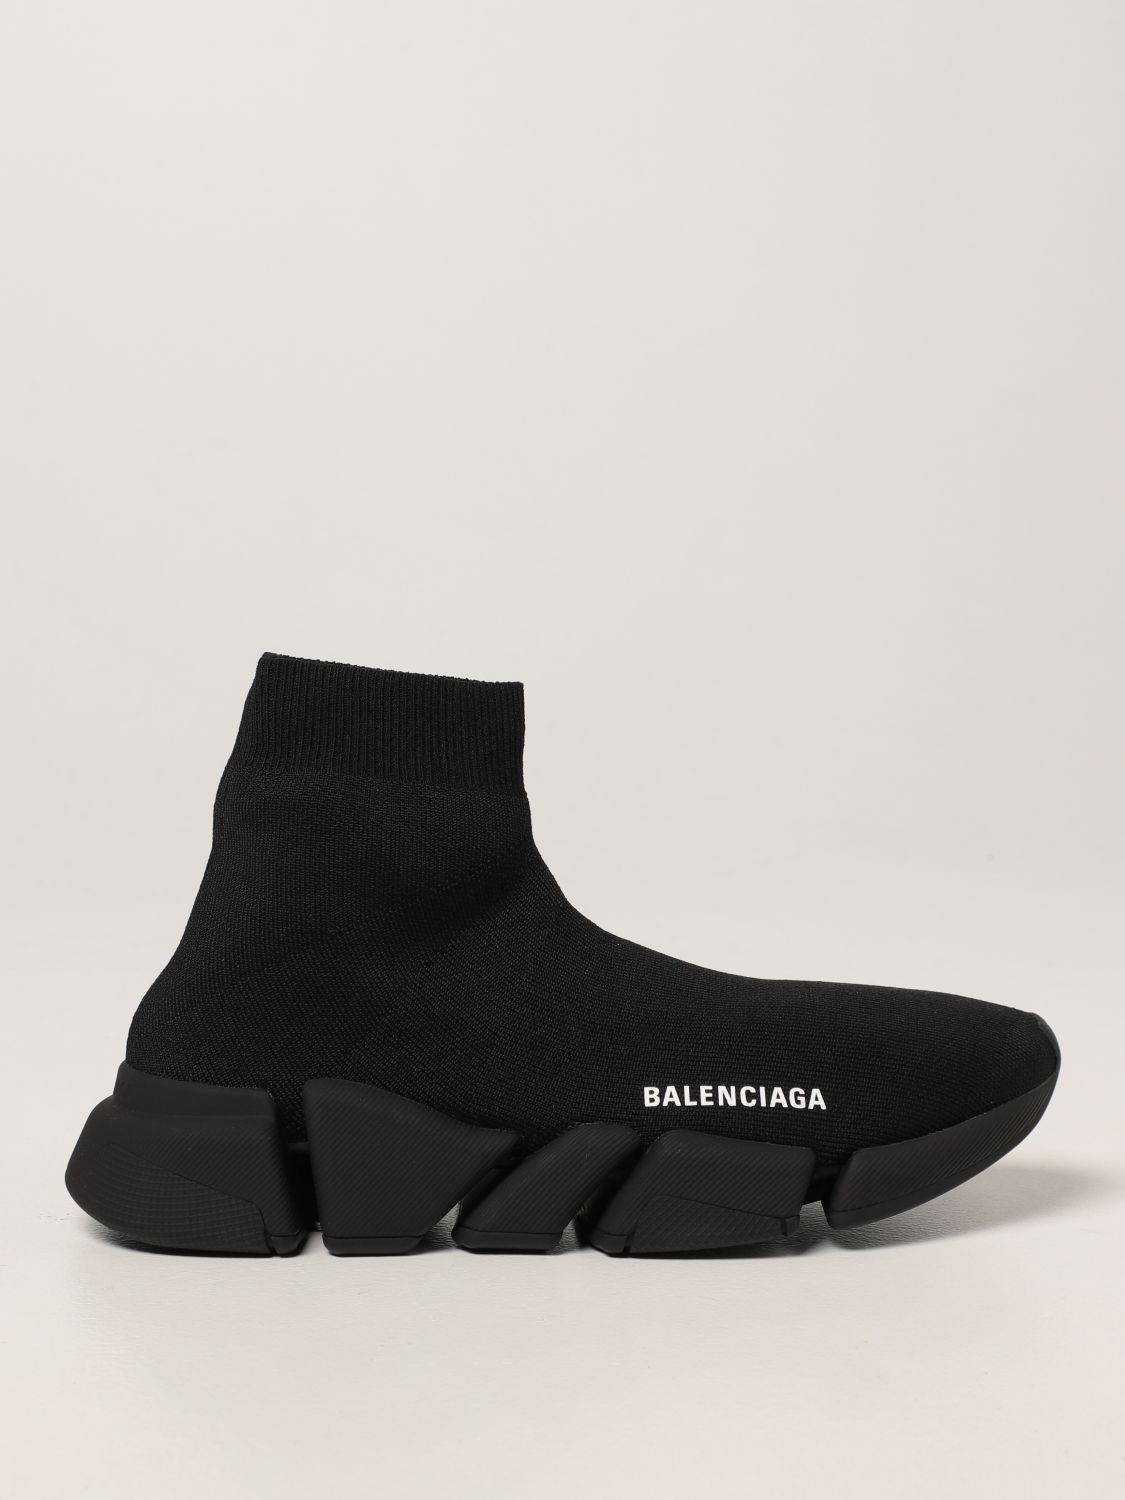 Balenciaga  Balenciaga x Adidas Speed Trainers knitted socksneakers